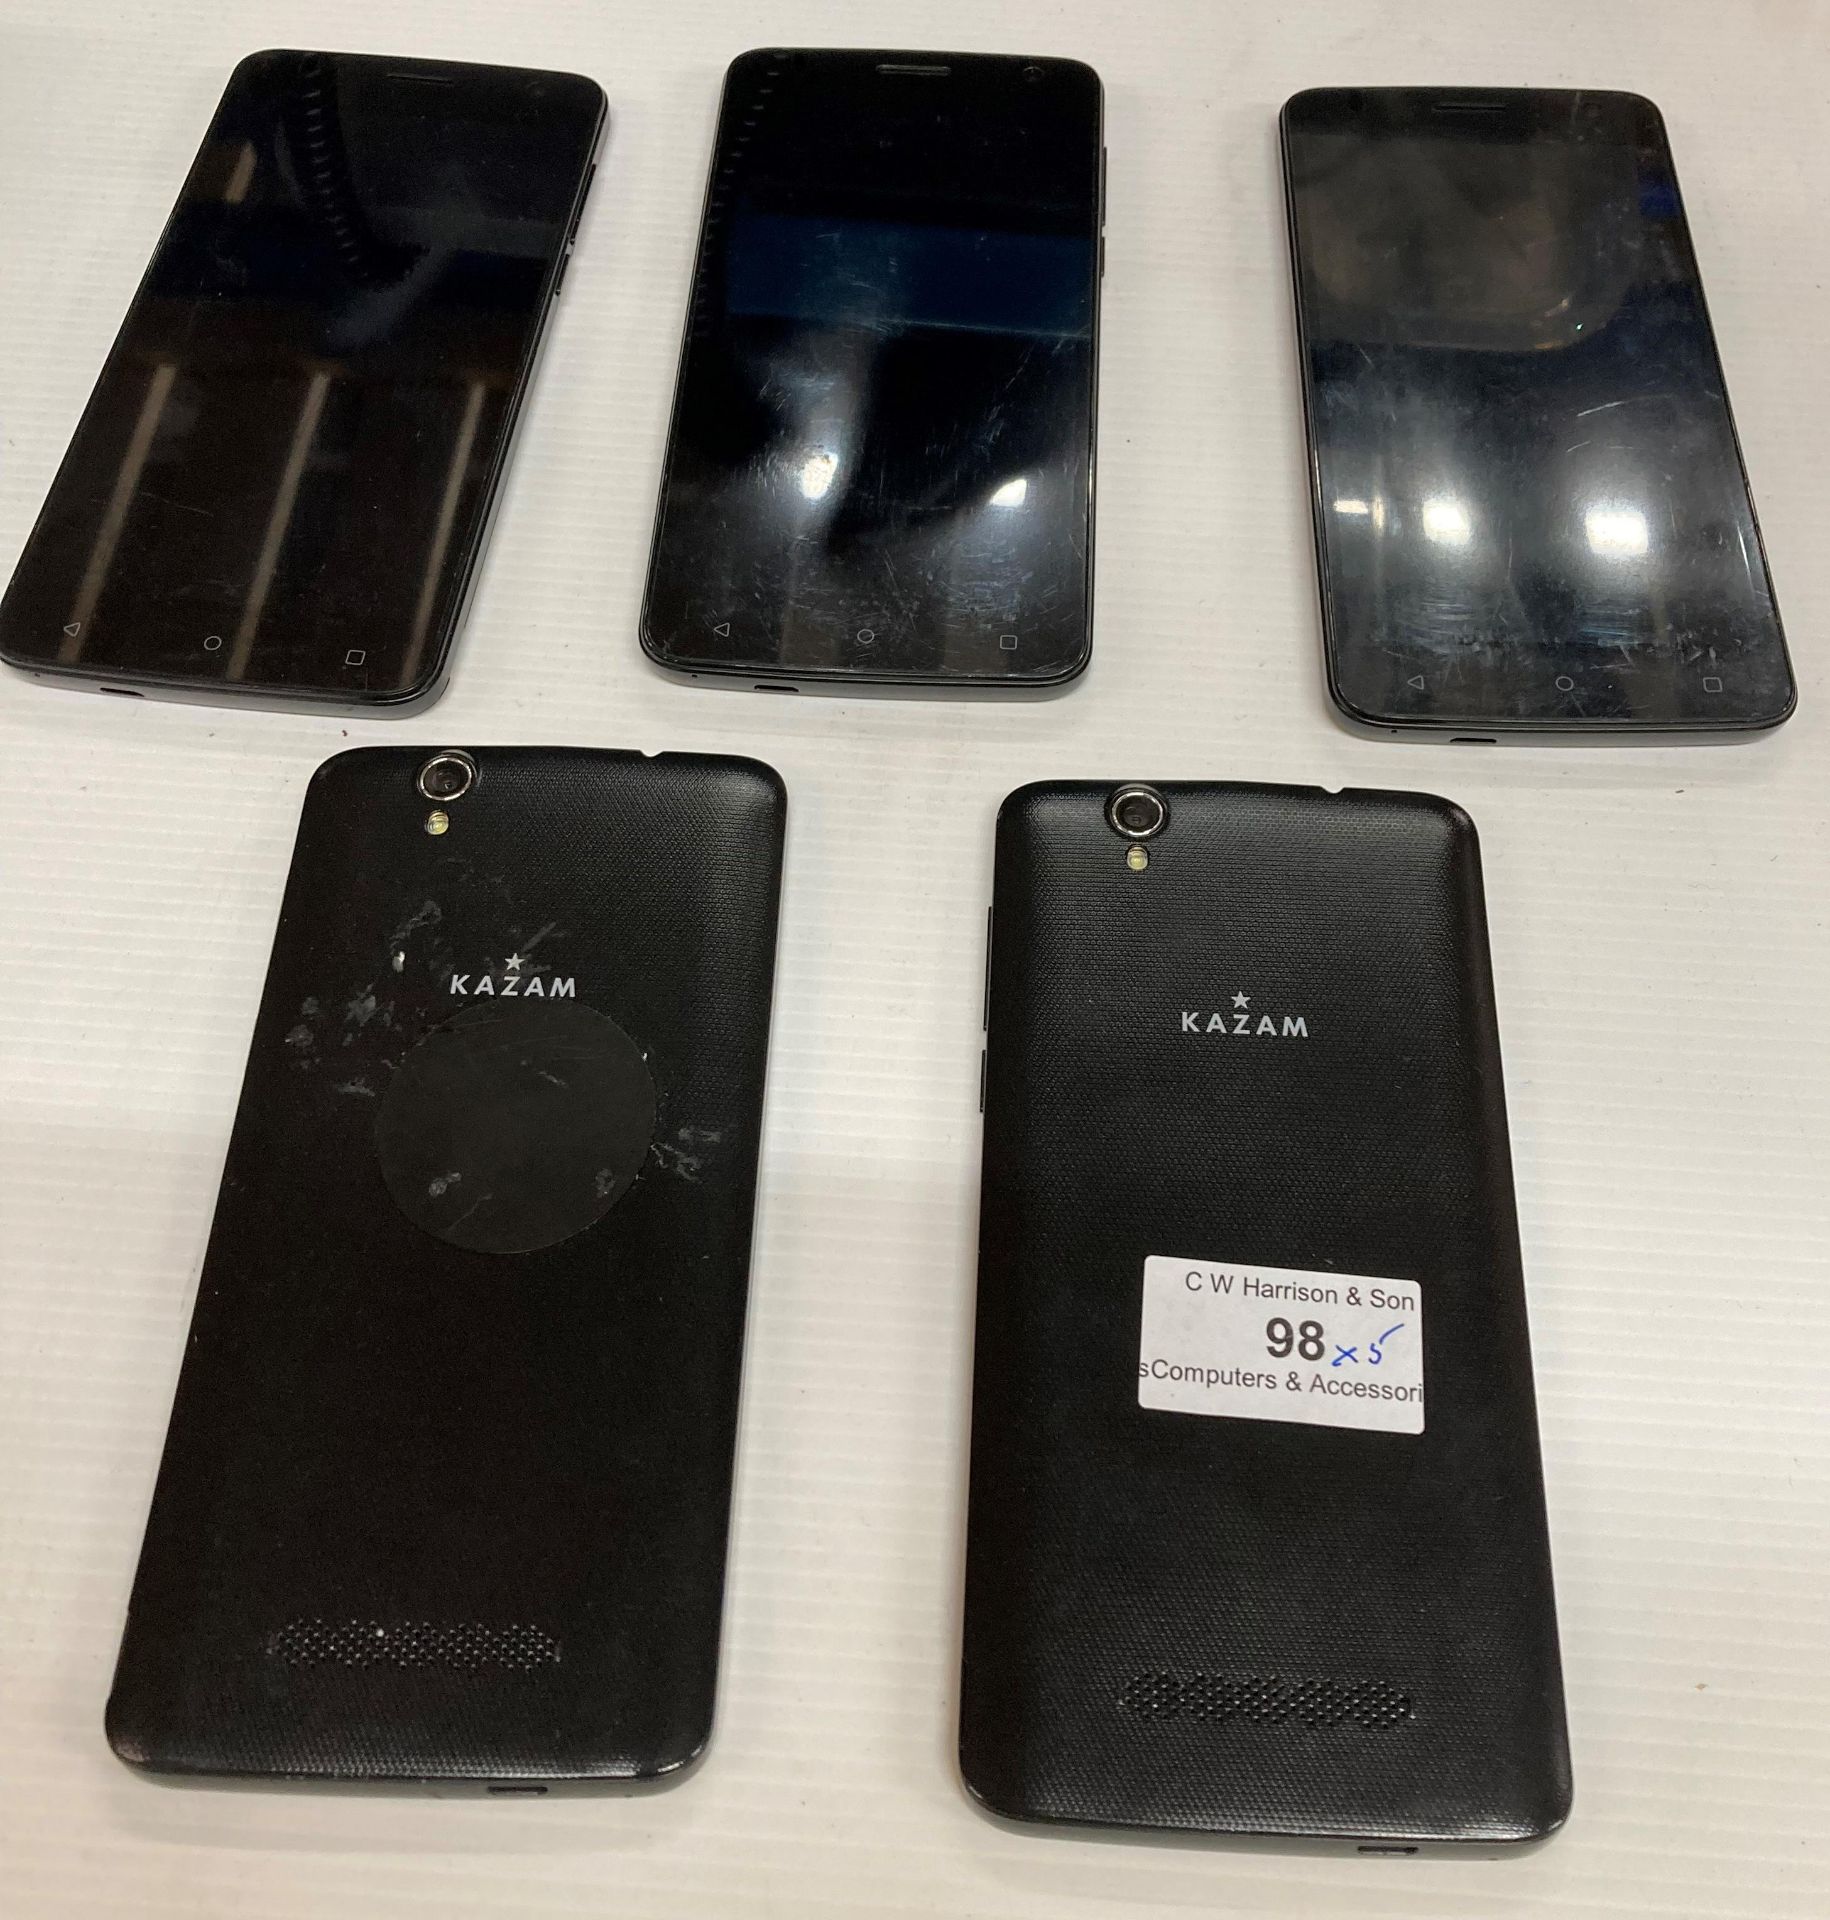 5 x Kazam Standard Mobile Phones no chargers (Saleroom location: G11)